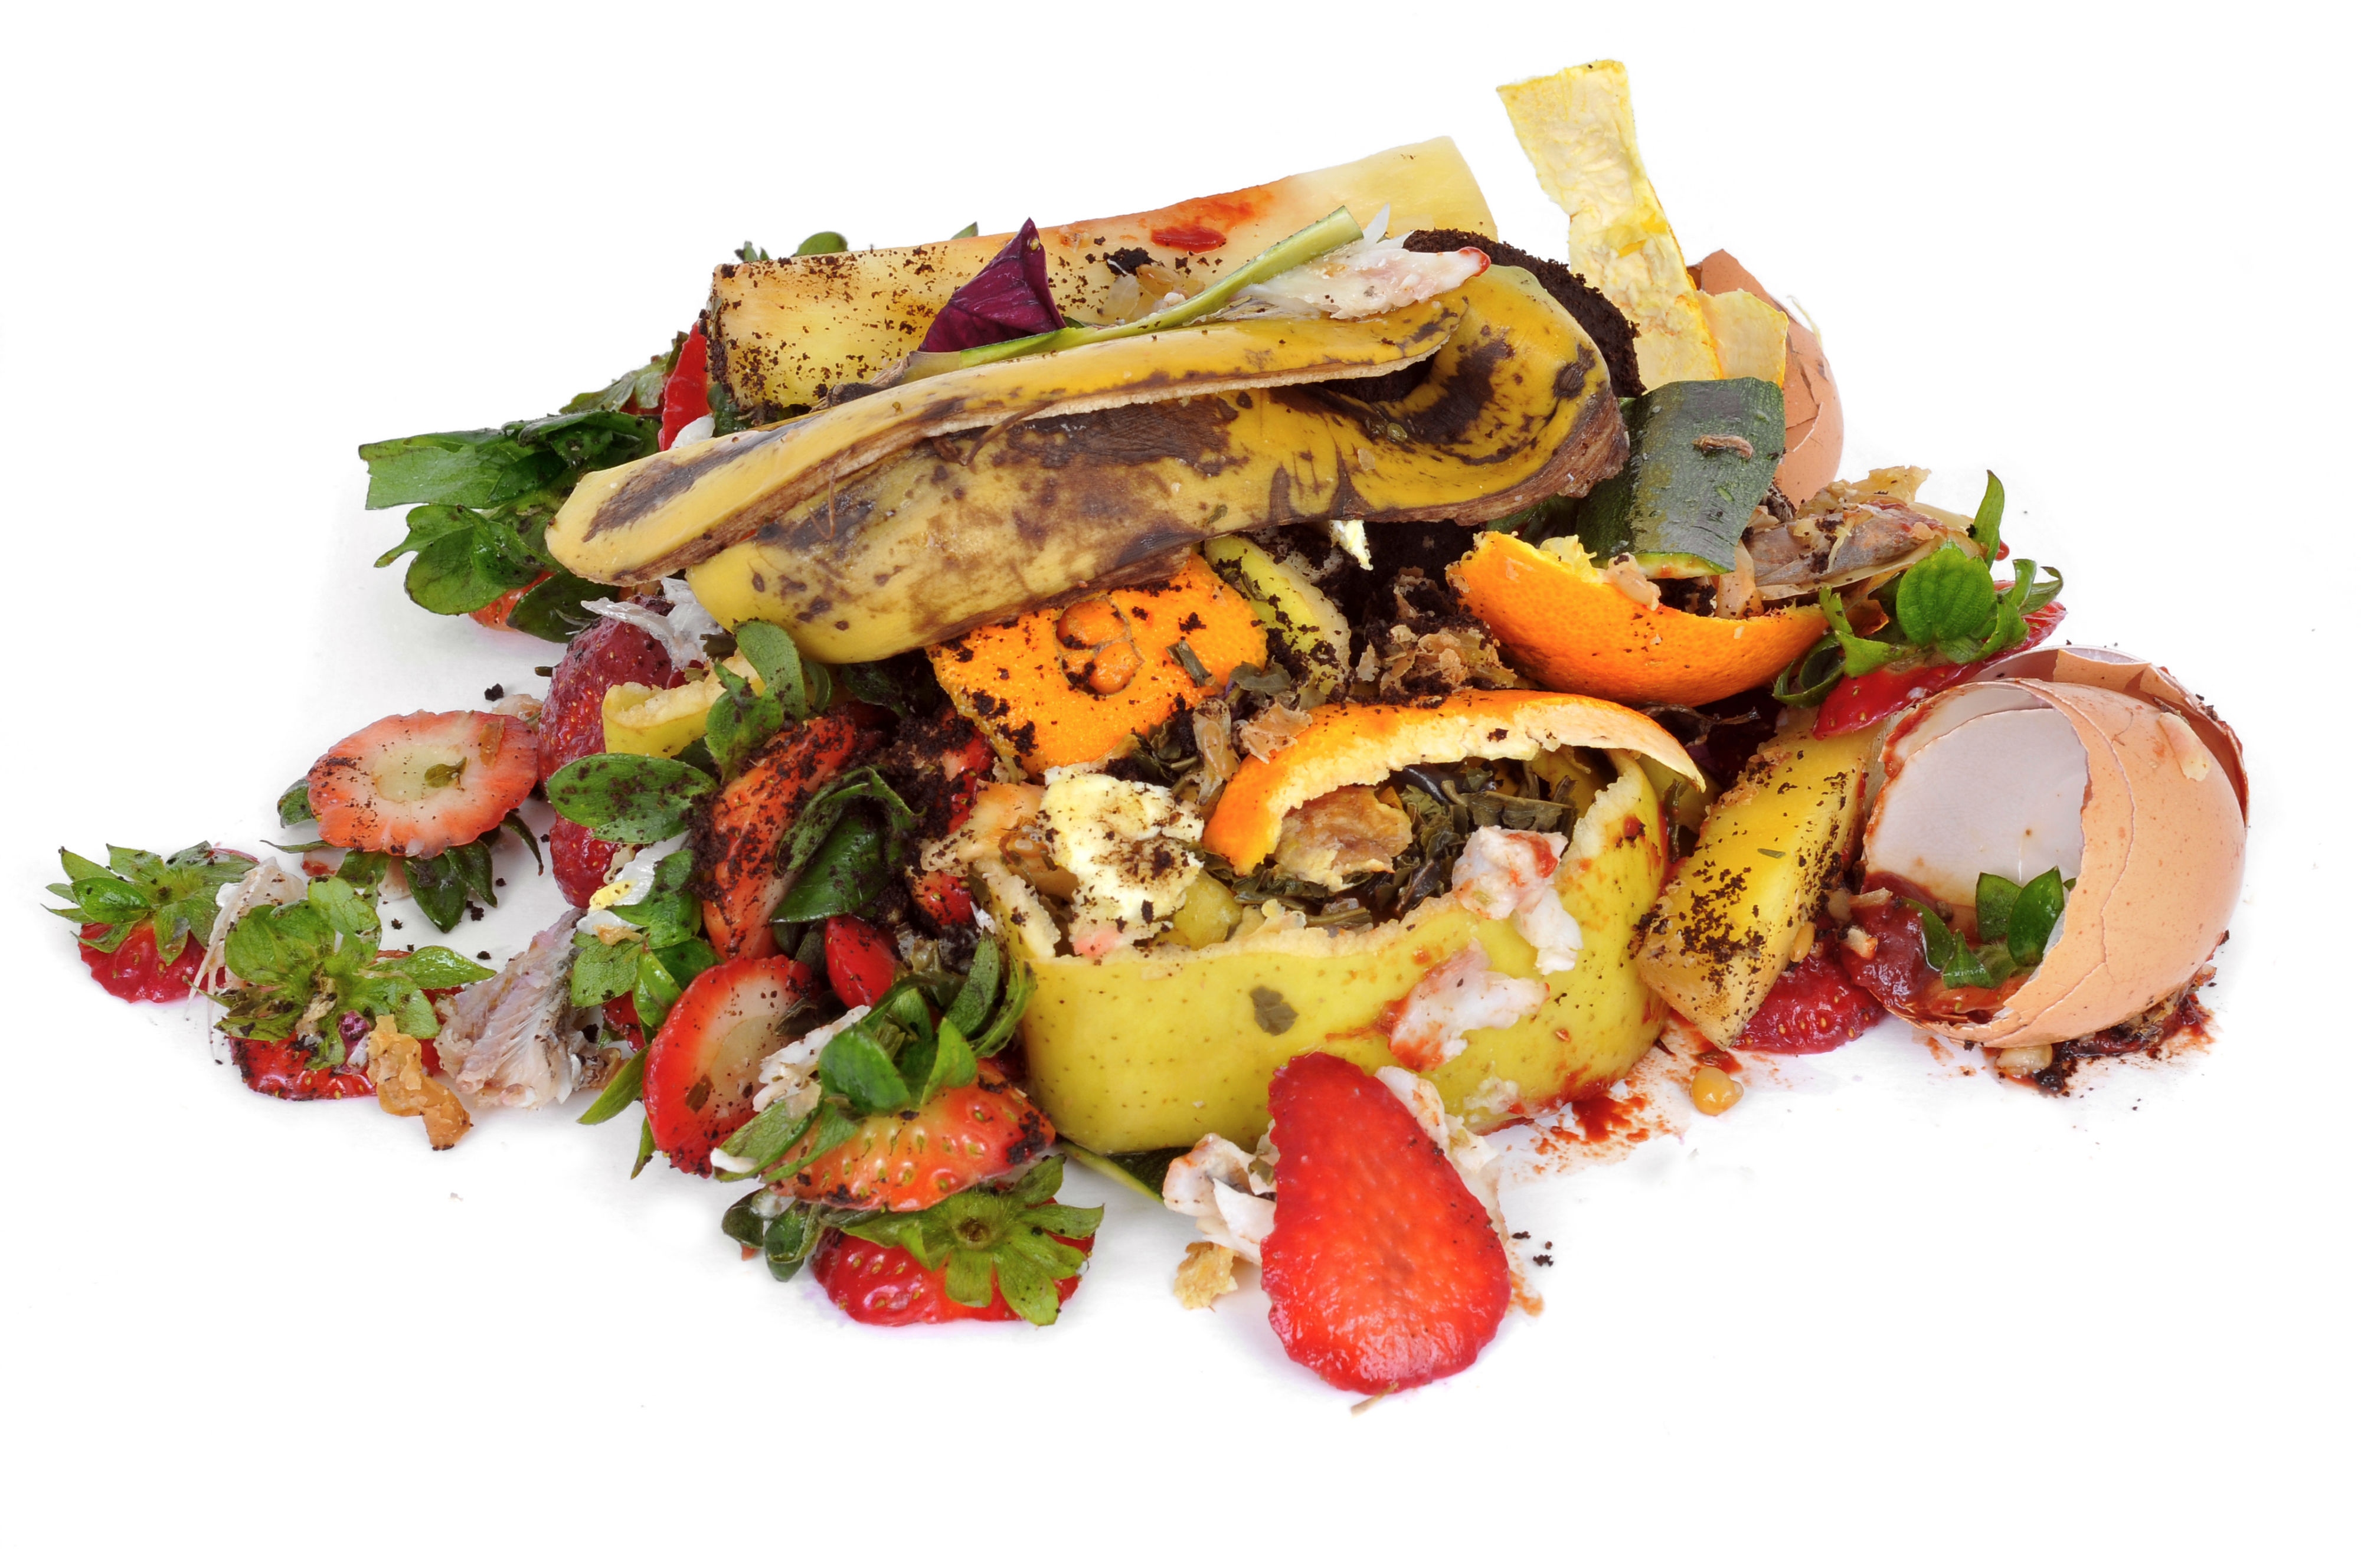 Simple ways to save on Food waste